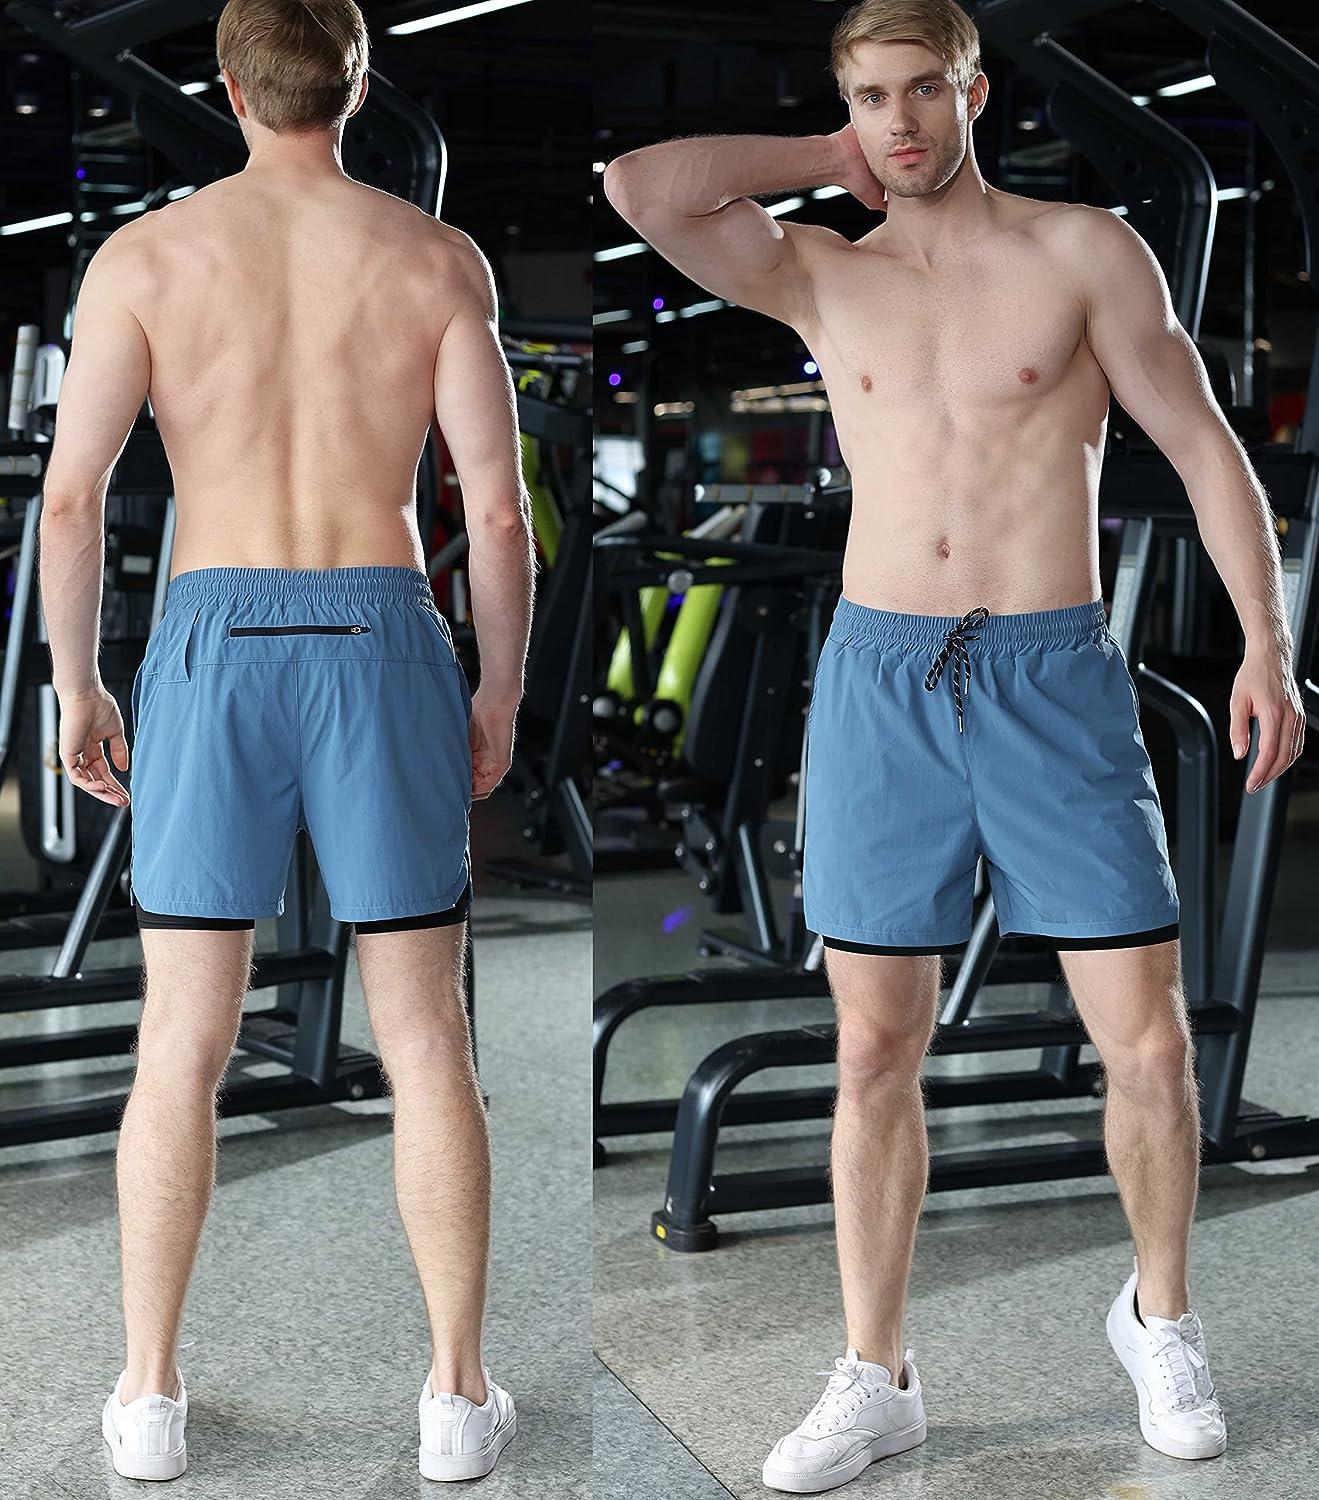 Mens Gym Shorts - Running, Training & Workout Shorts